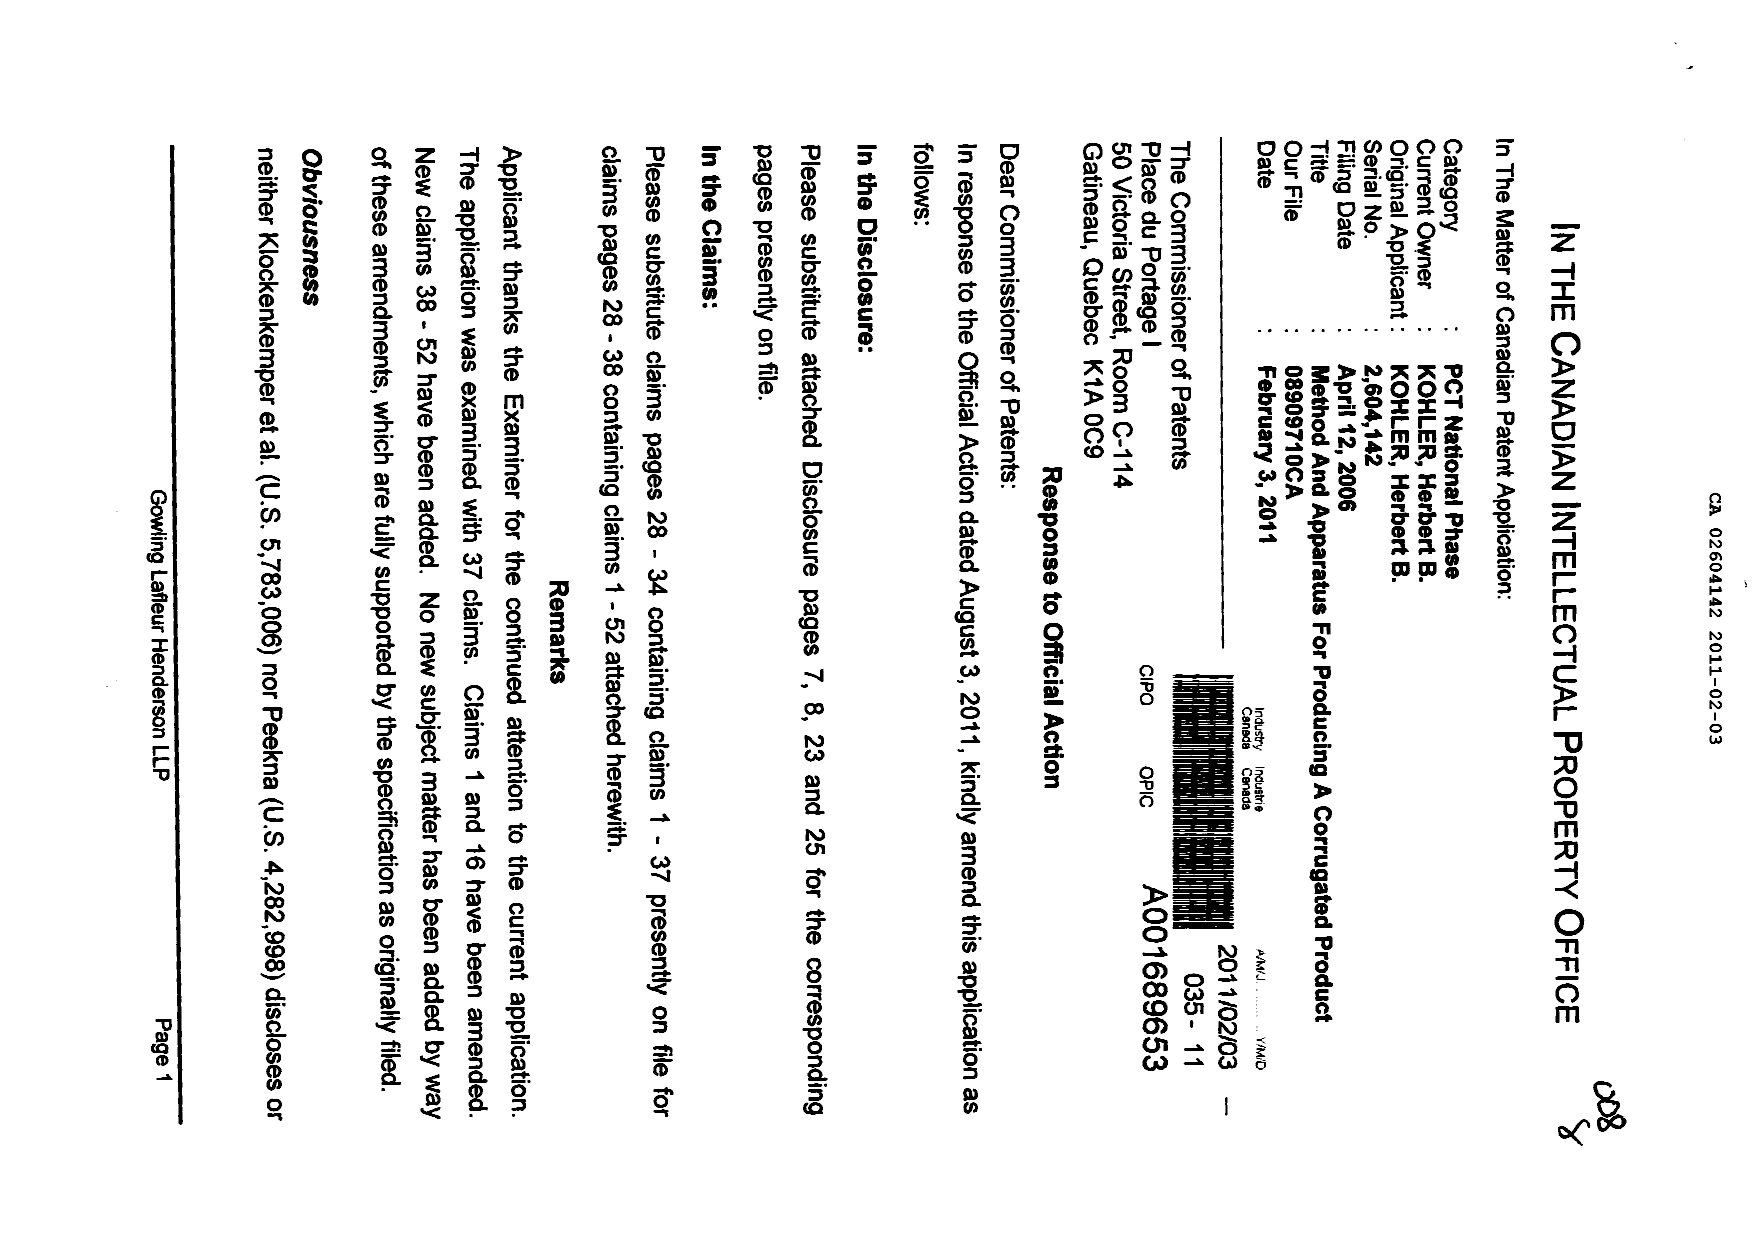 Canadian Patent Document 2604142. Prosecution-Amendment 20110203. Image 1 of 20